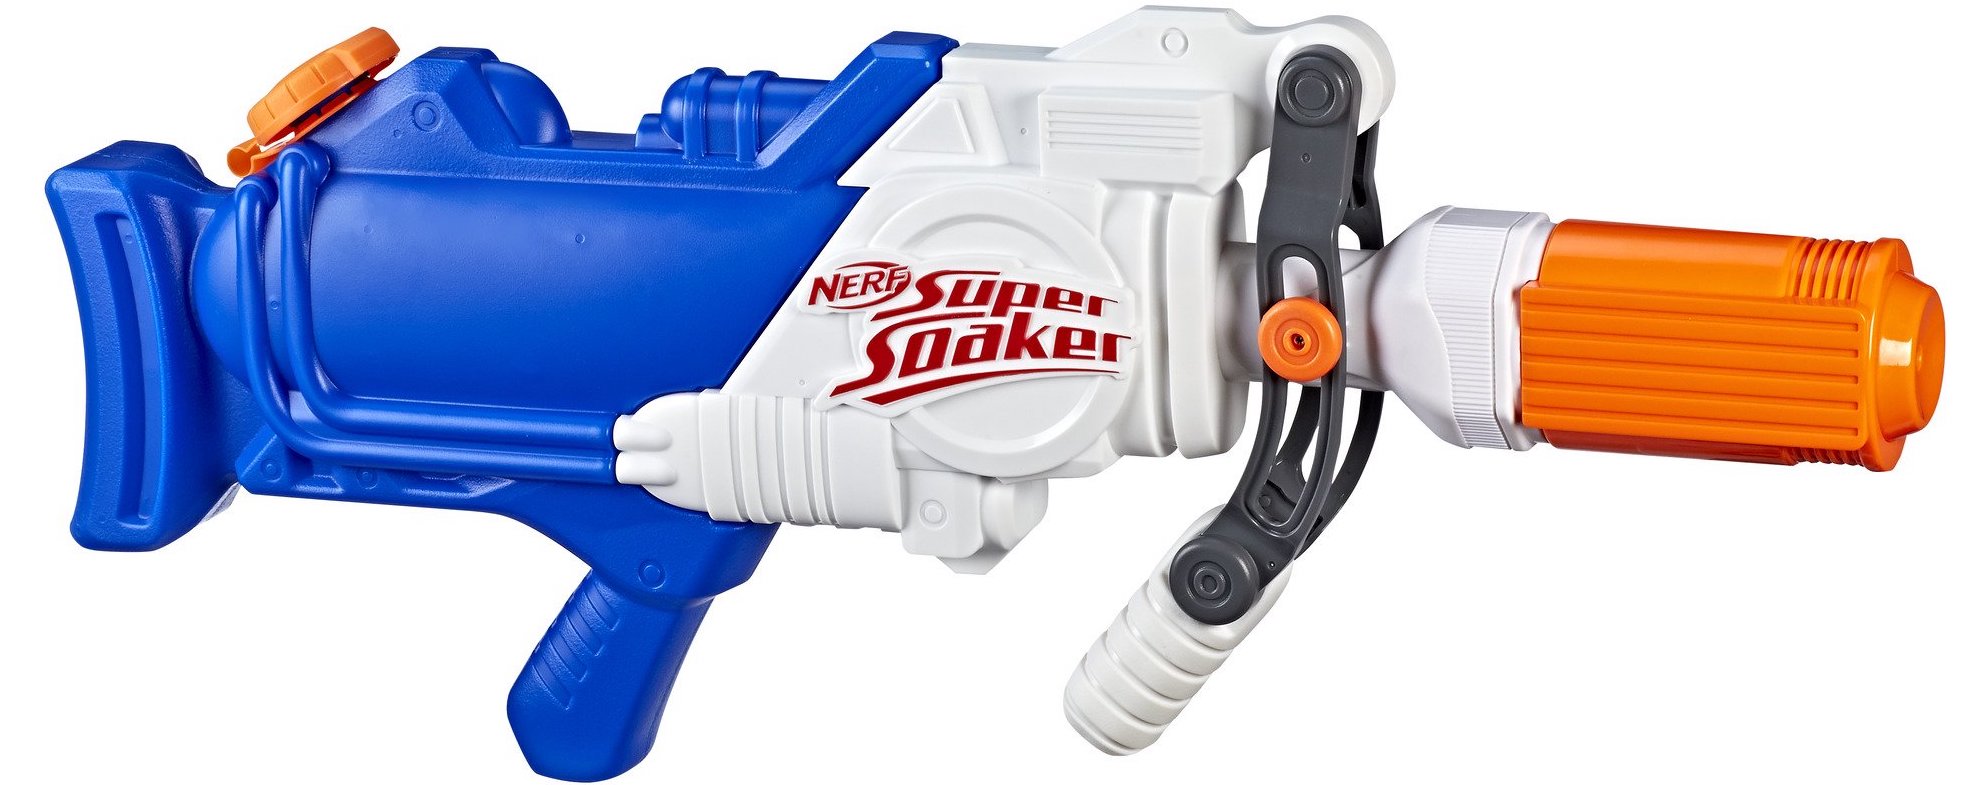 Nerf water soaker gun 